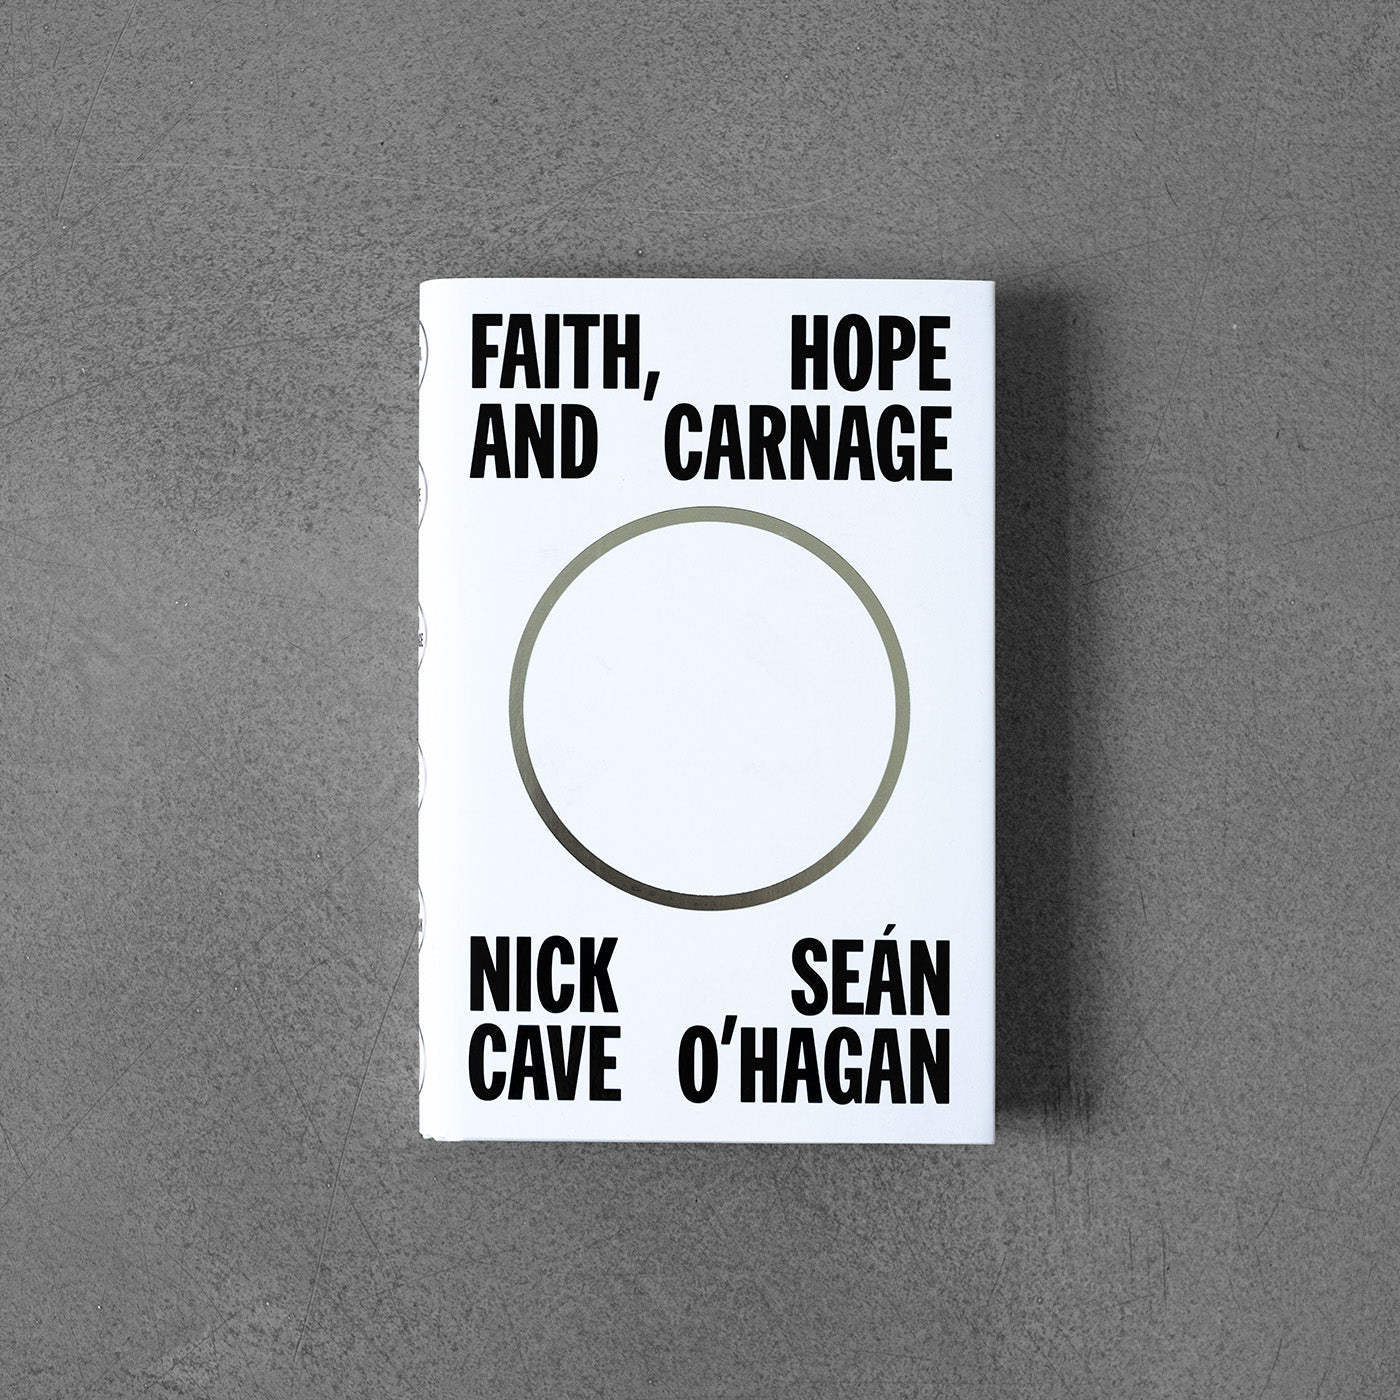 Faith, Hope and Carnage, Nick Cave, Sean O'Hagan